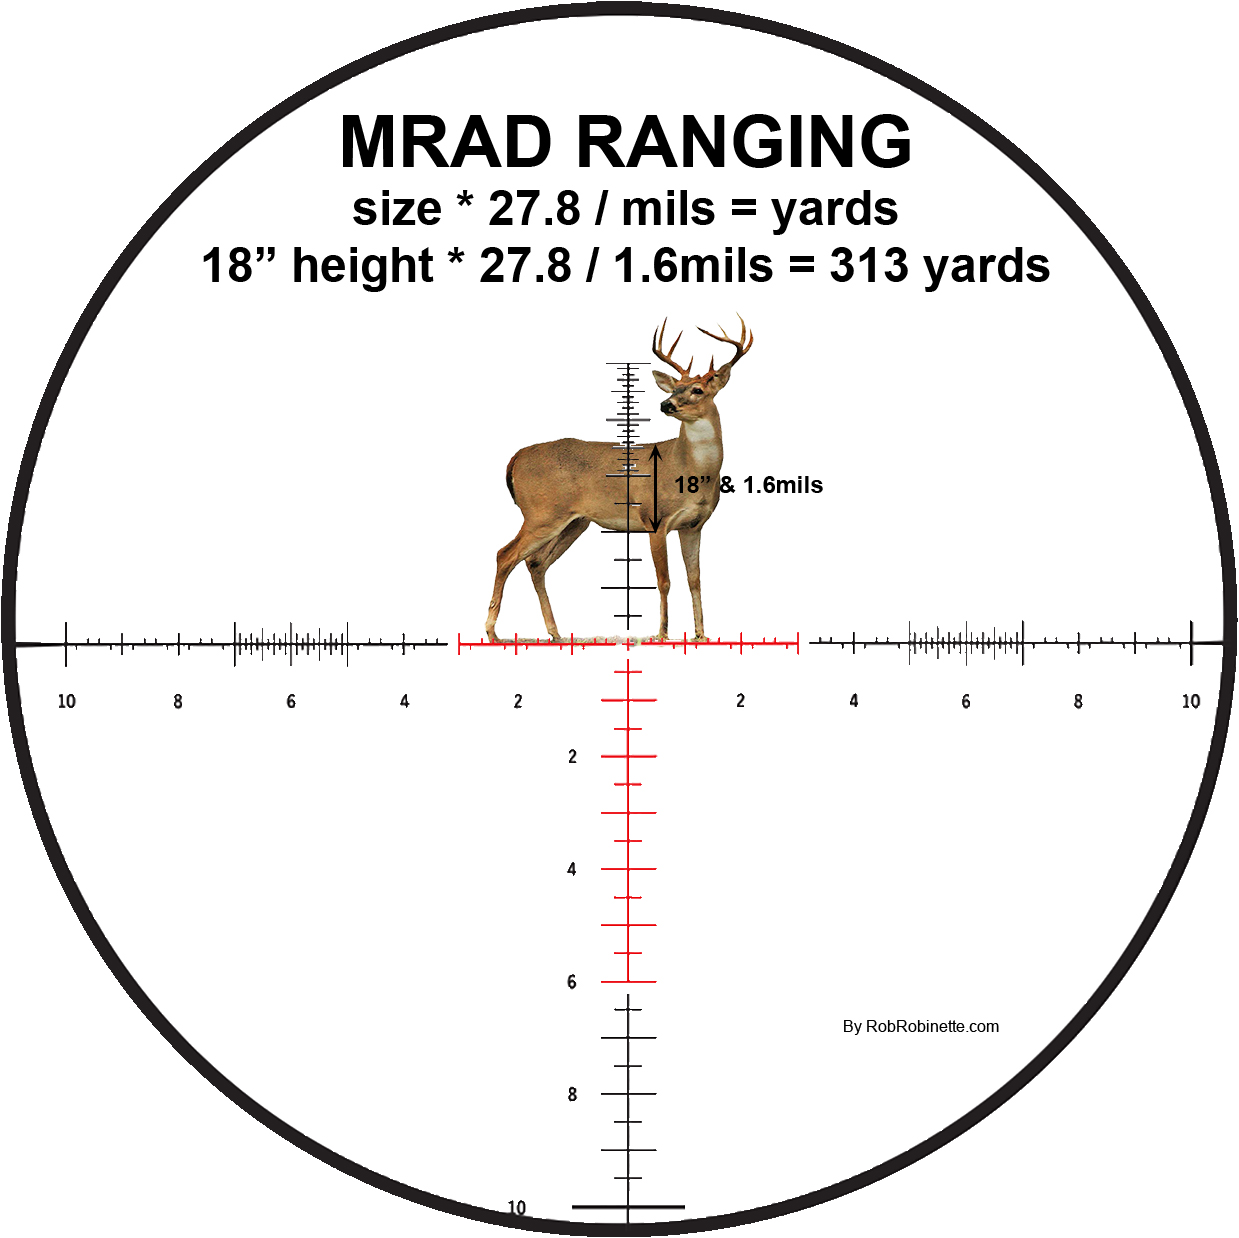 rifle-scopes-mrad-ranging-formulae-sniper-s-hide-forum